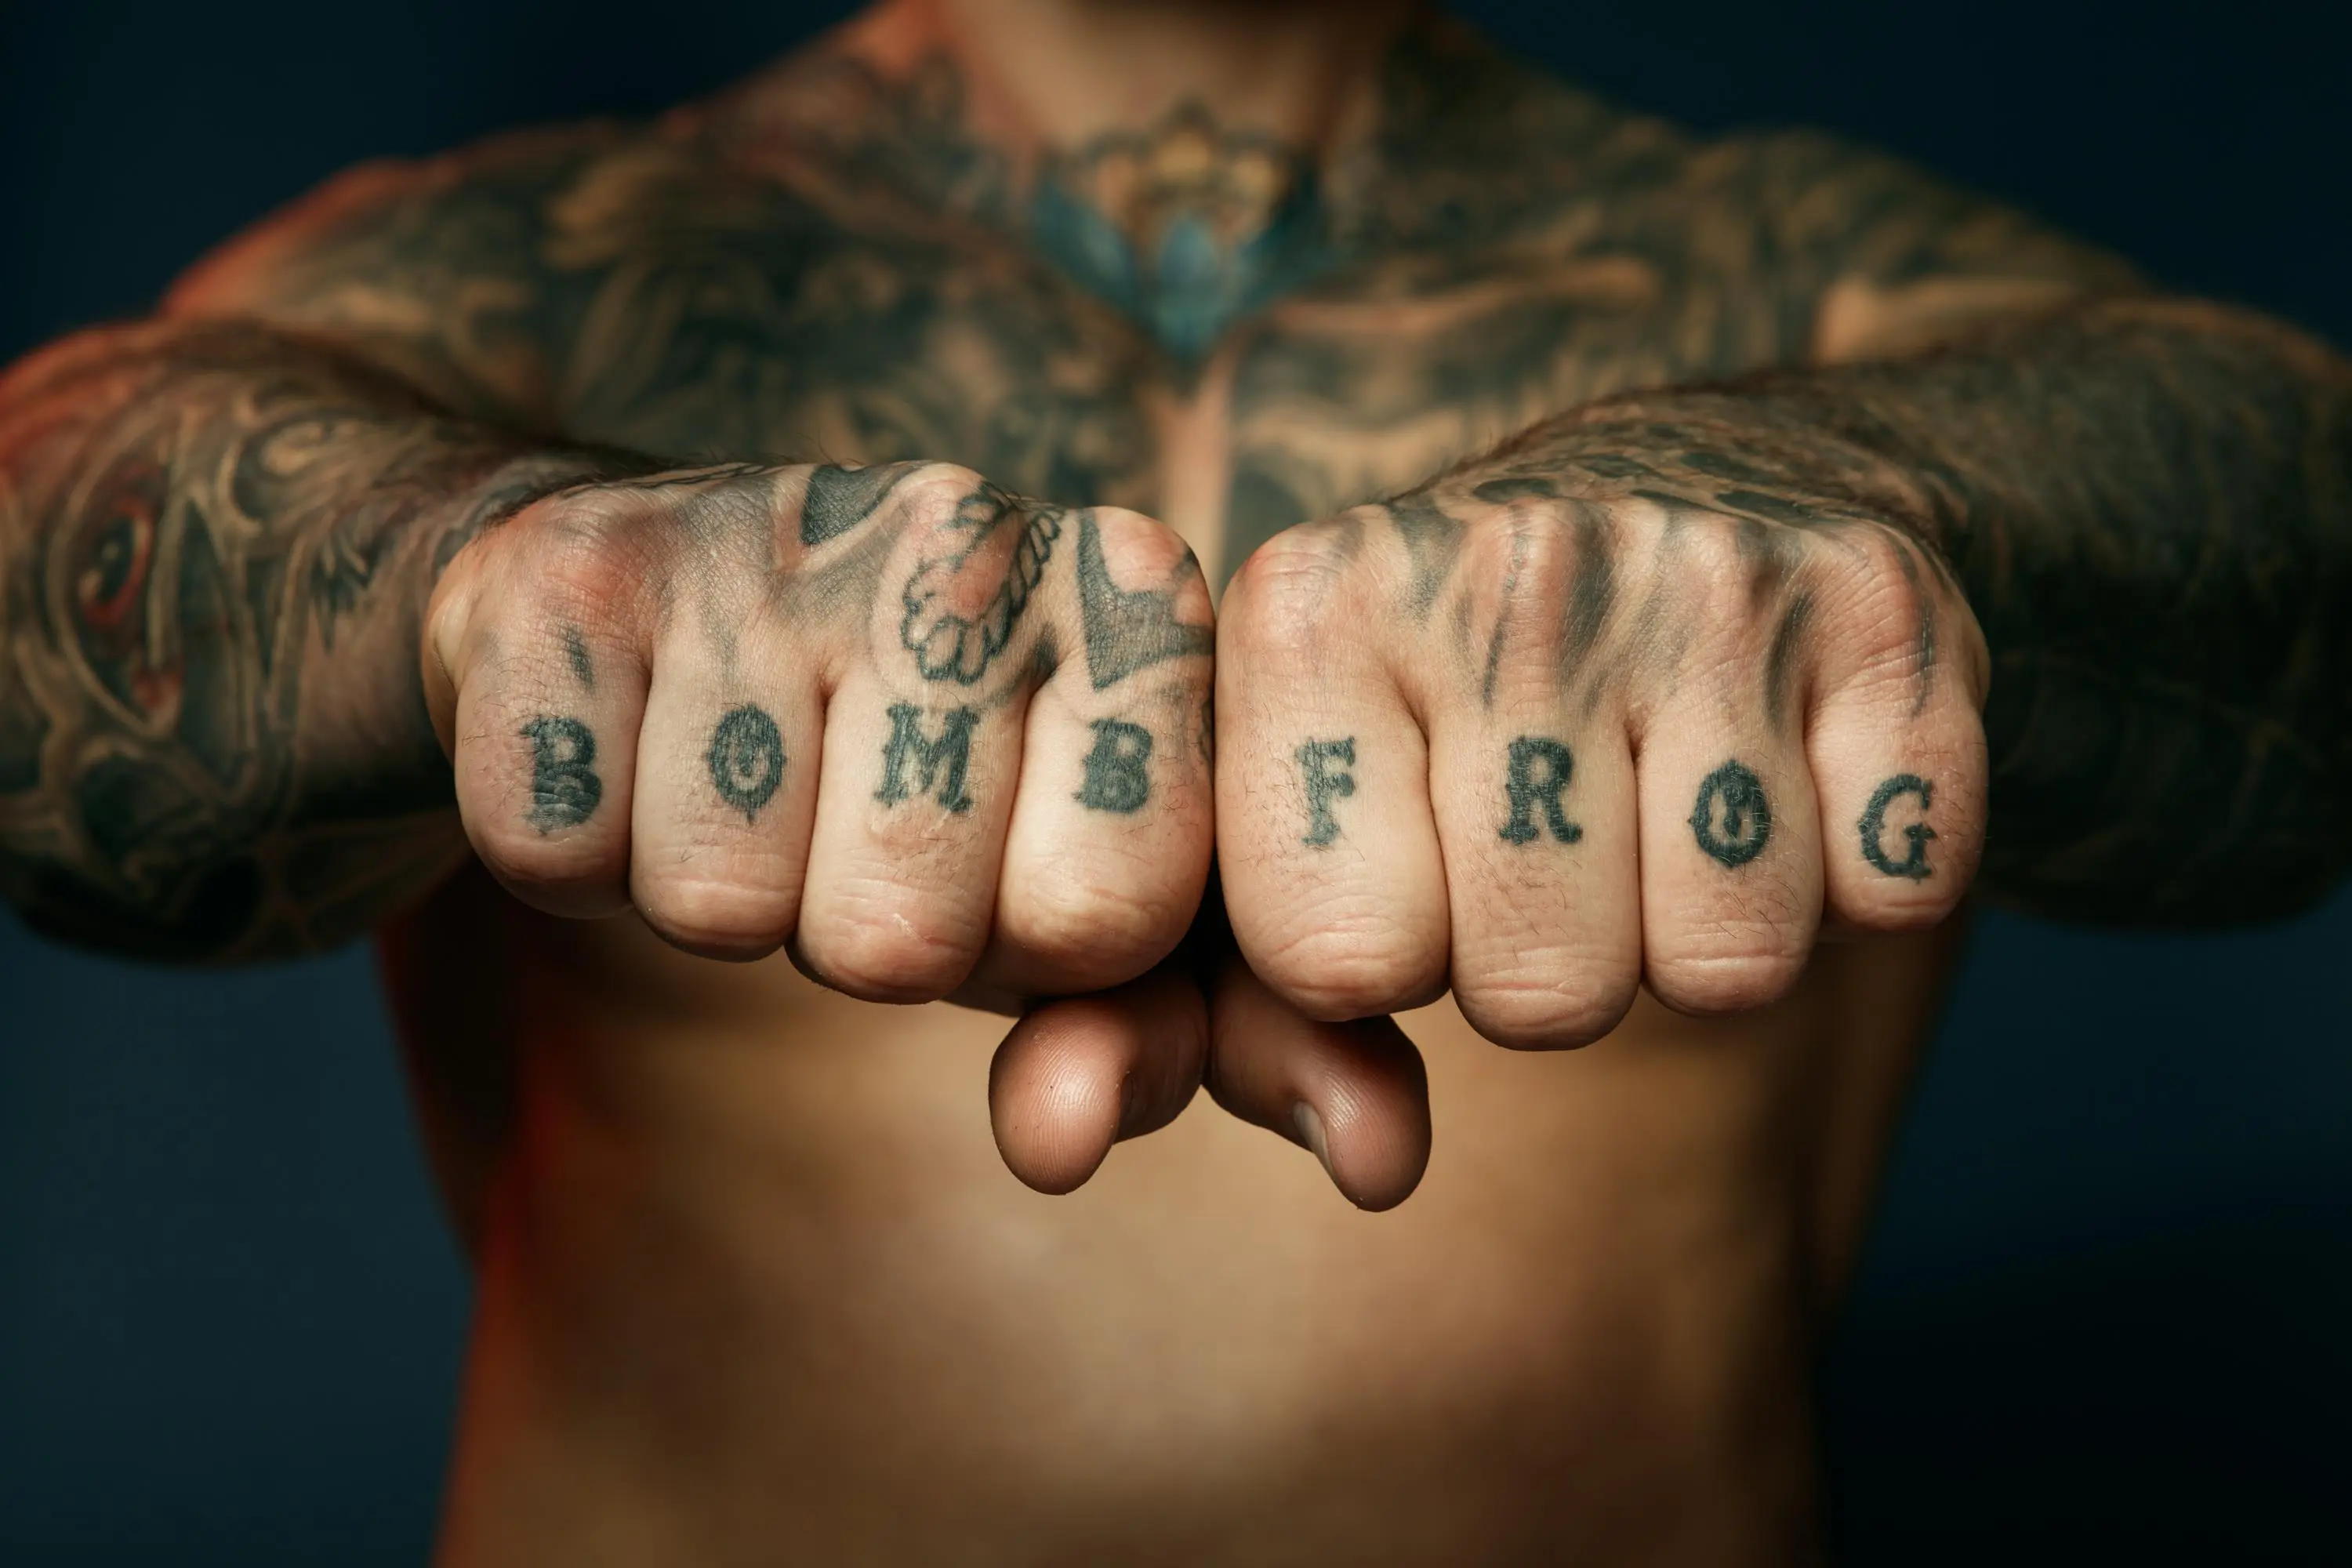 PHOTOS Tattoos in the military Photos  ABC News